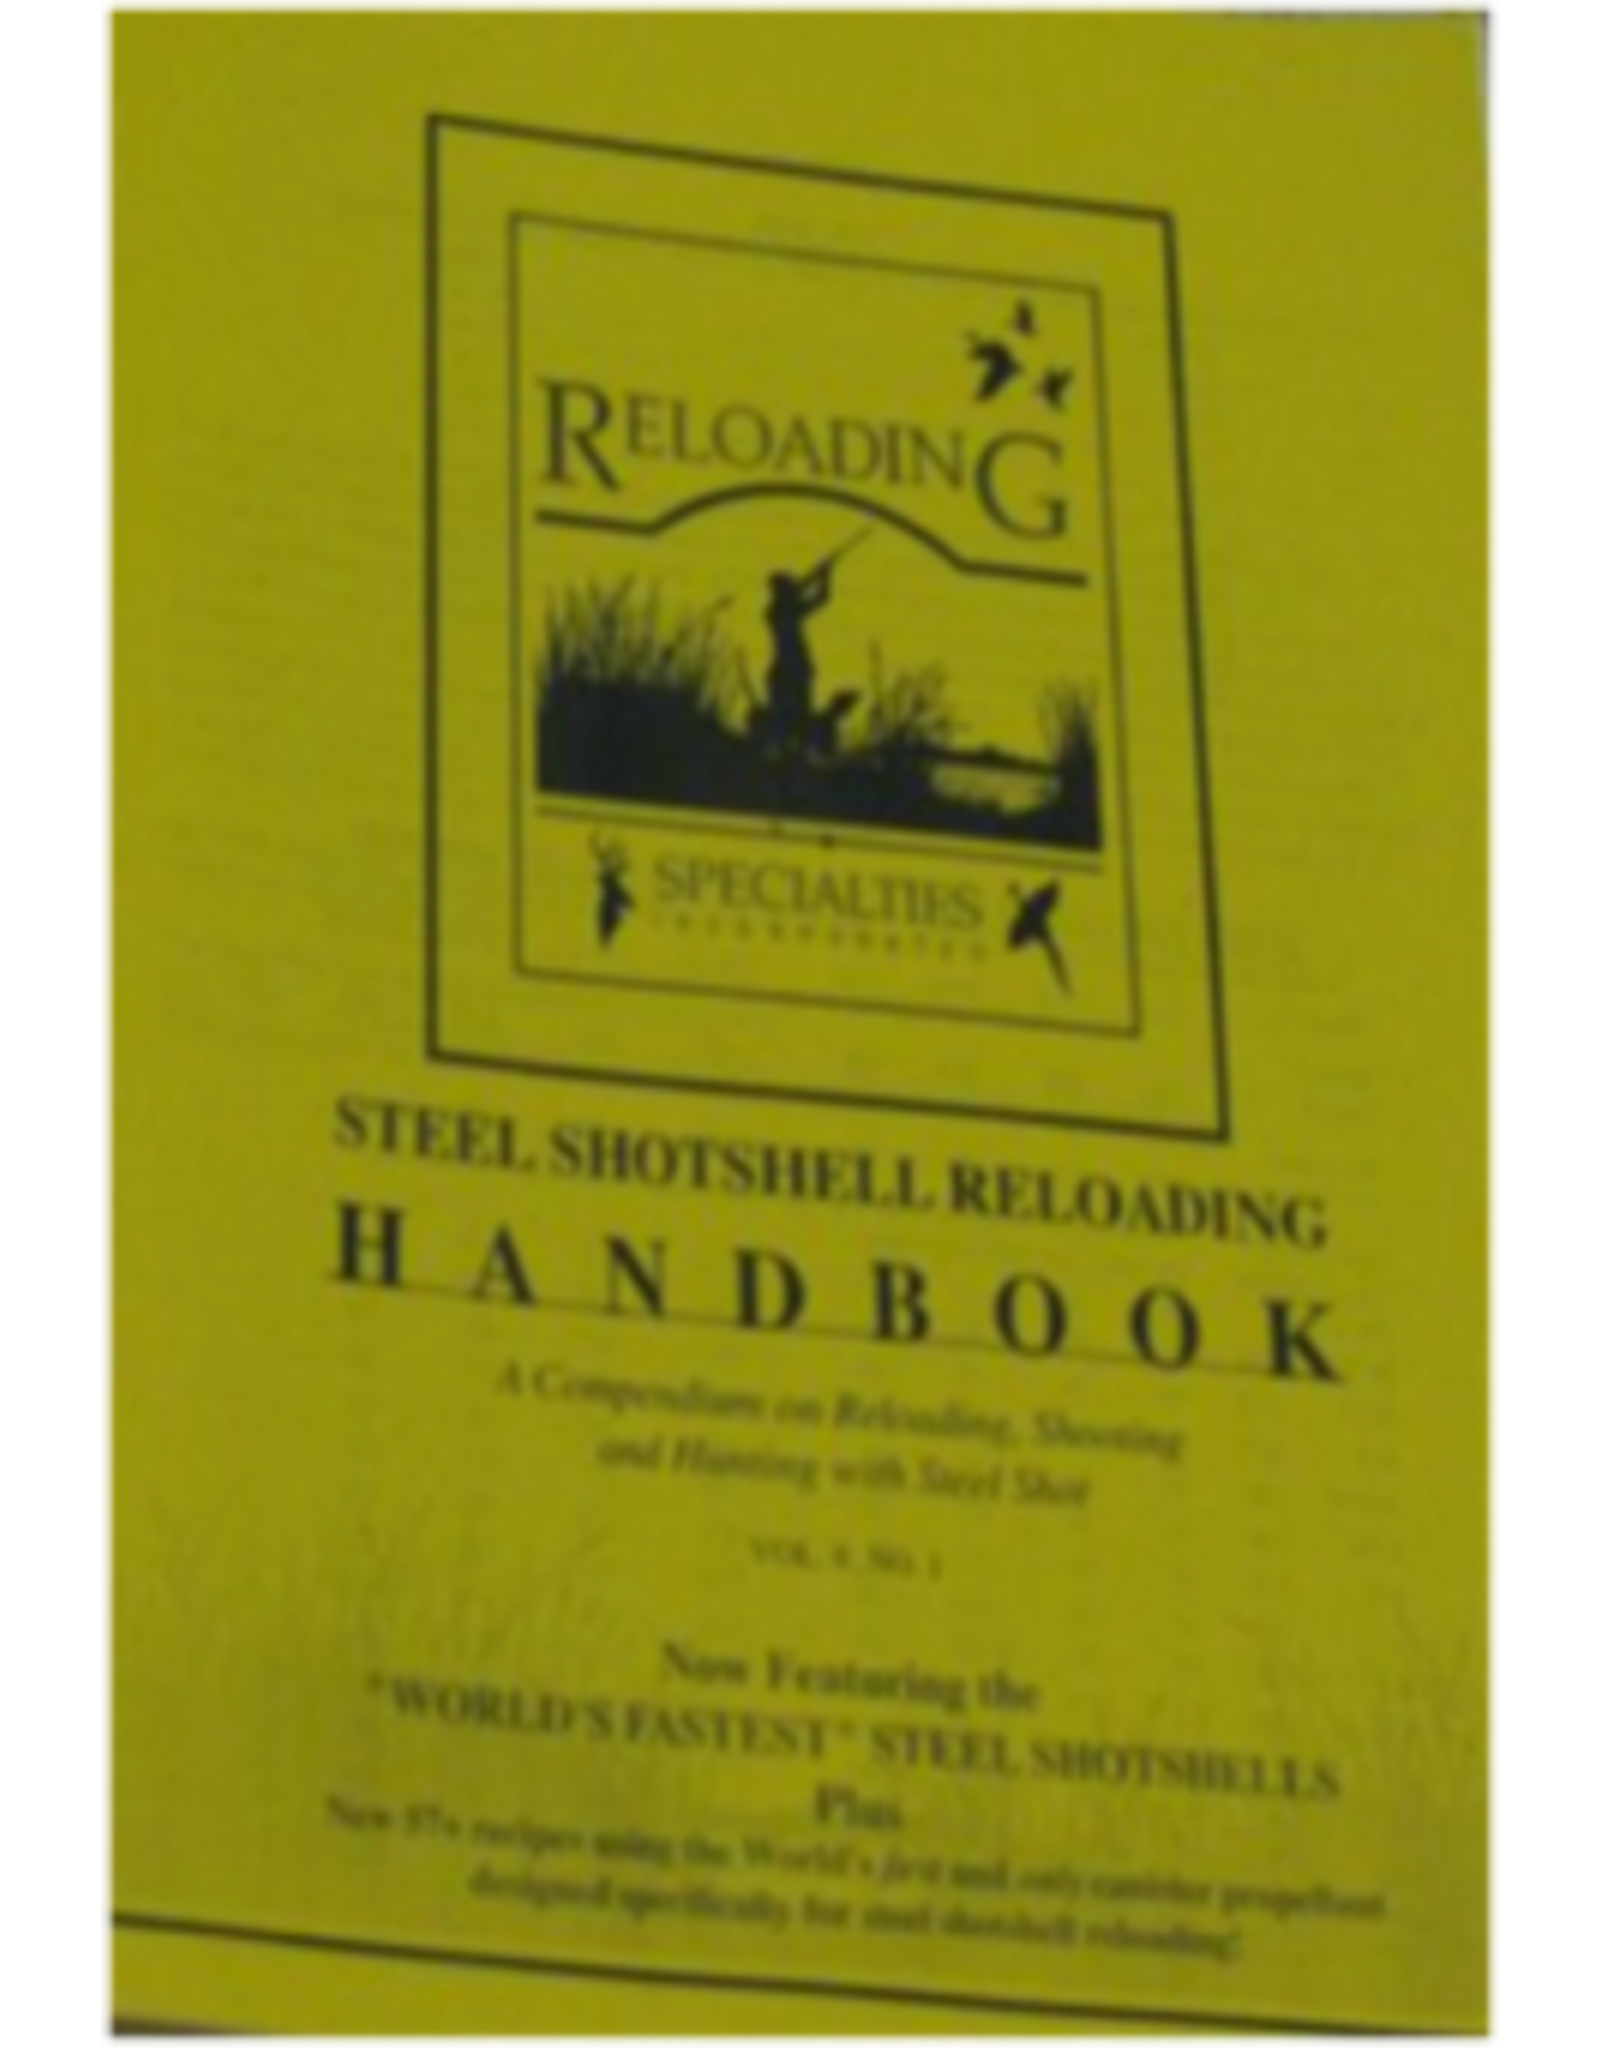 RSI Steel Shot Reloading Handbook